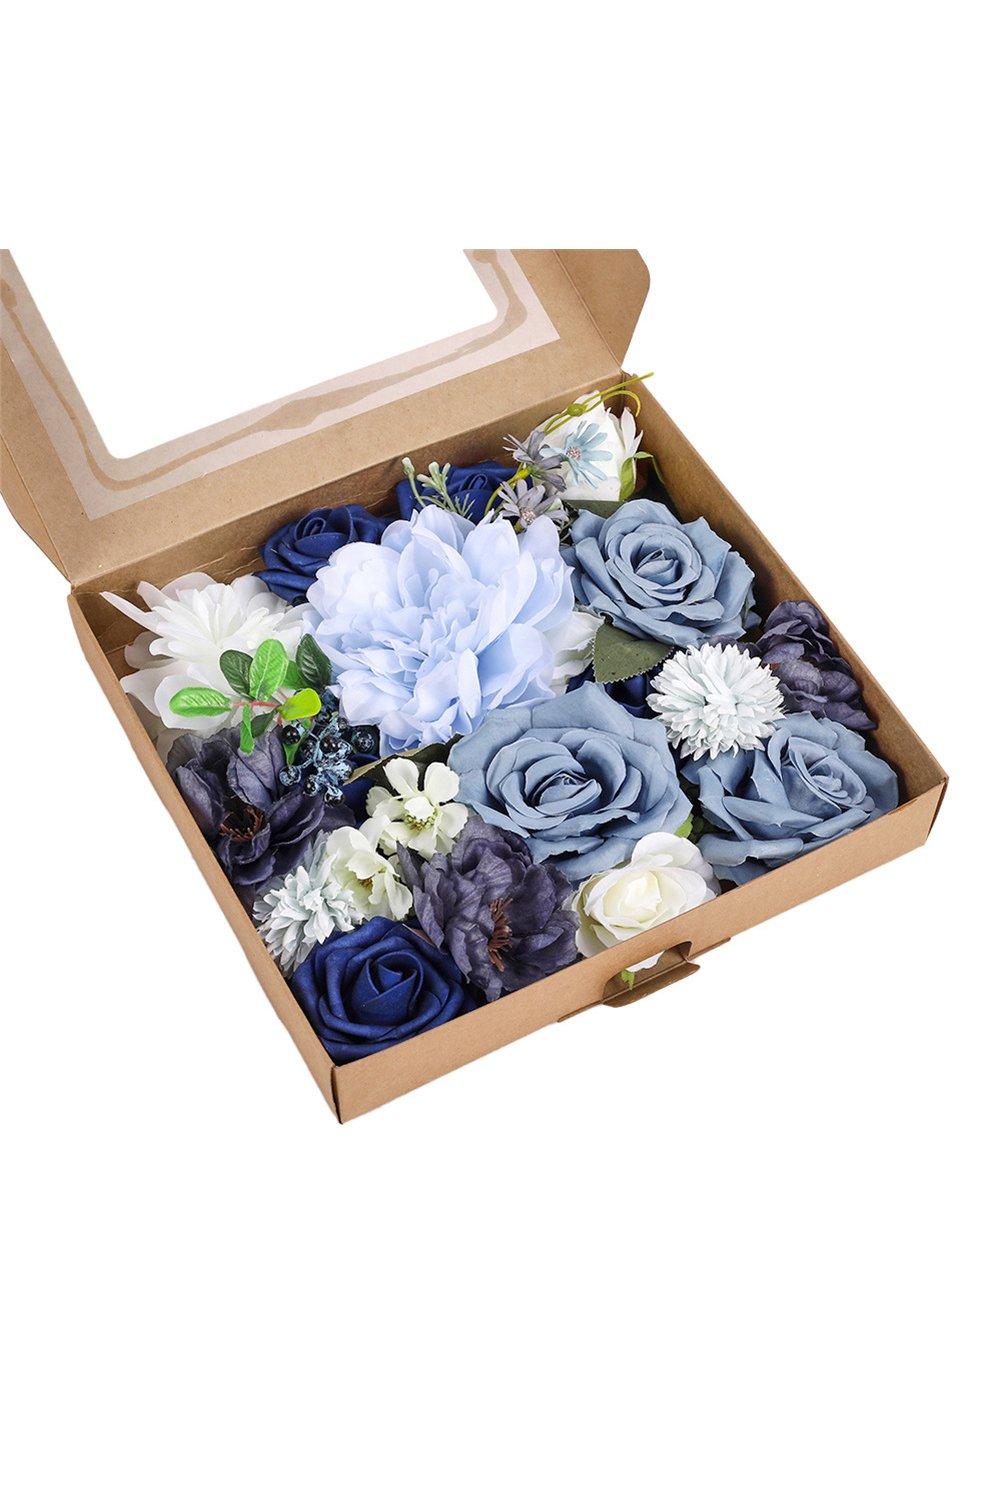 Fake Flower Gift Box for Valentine's Day Wedding